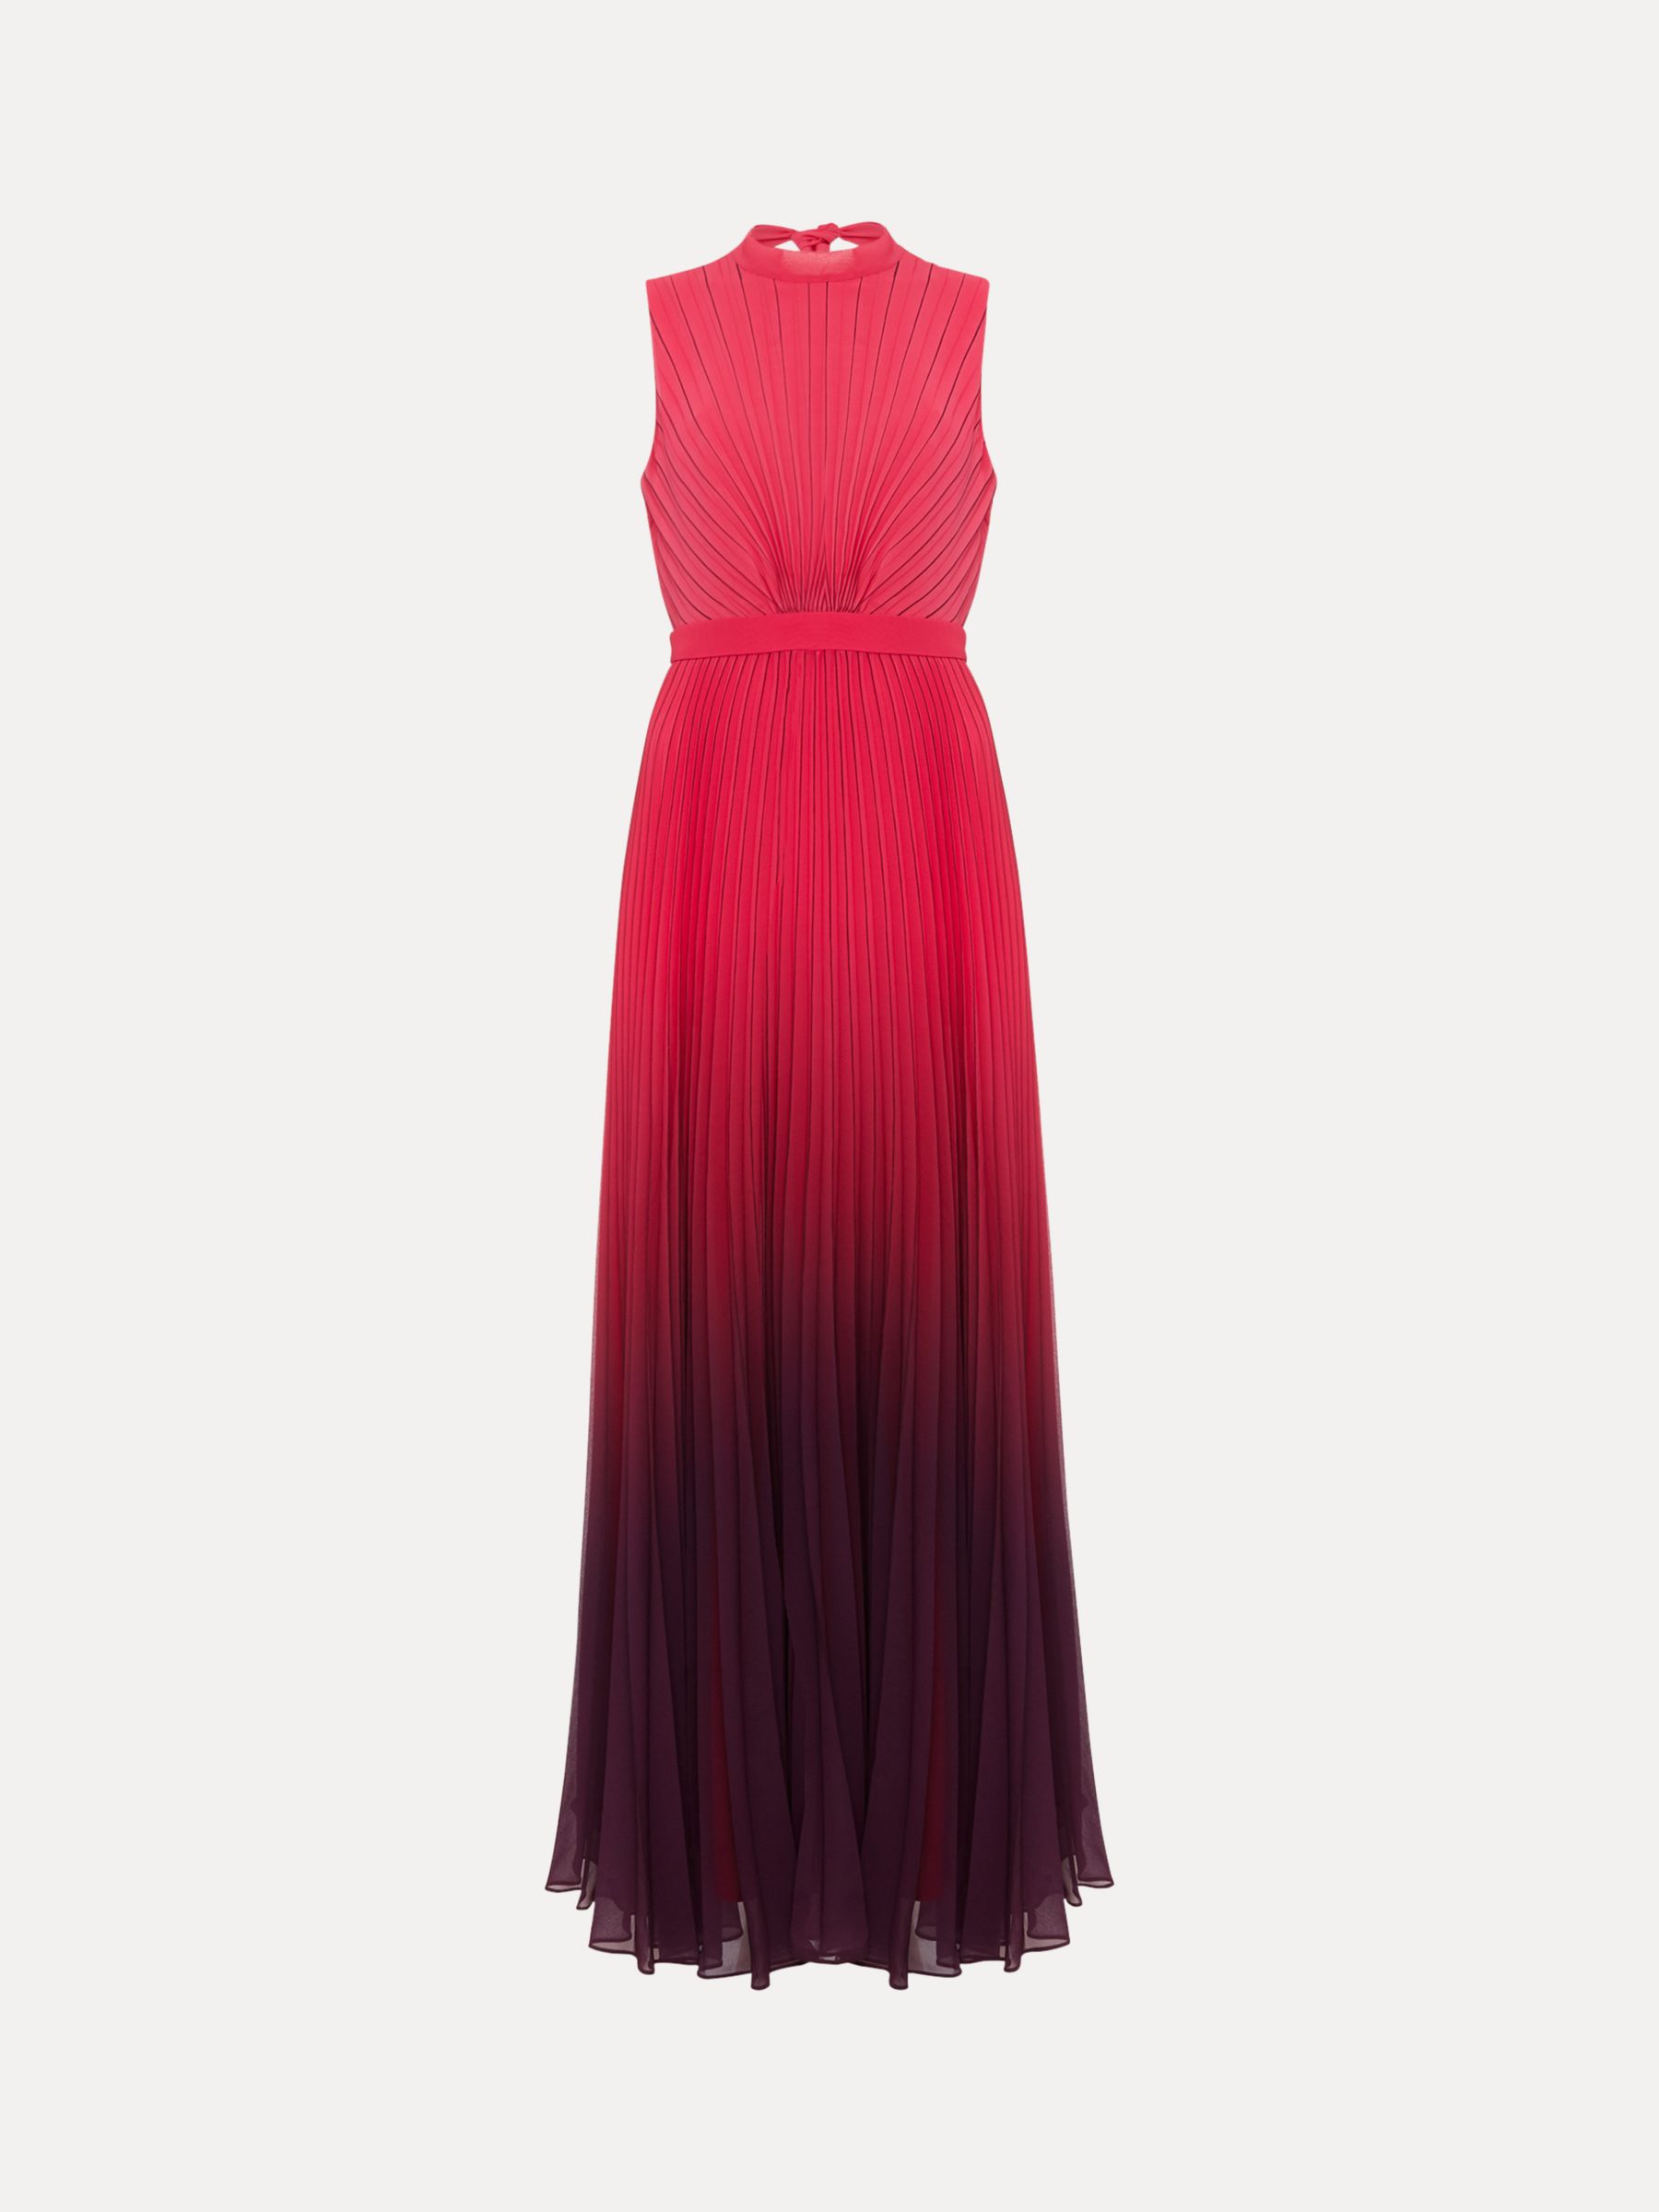 Phase Eight Daniella Pleated Ombre Maxi Dress, Pink/Multi, 14